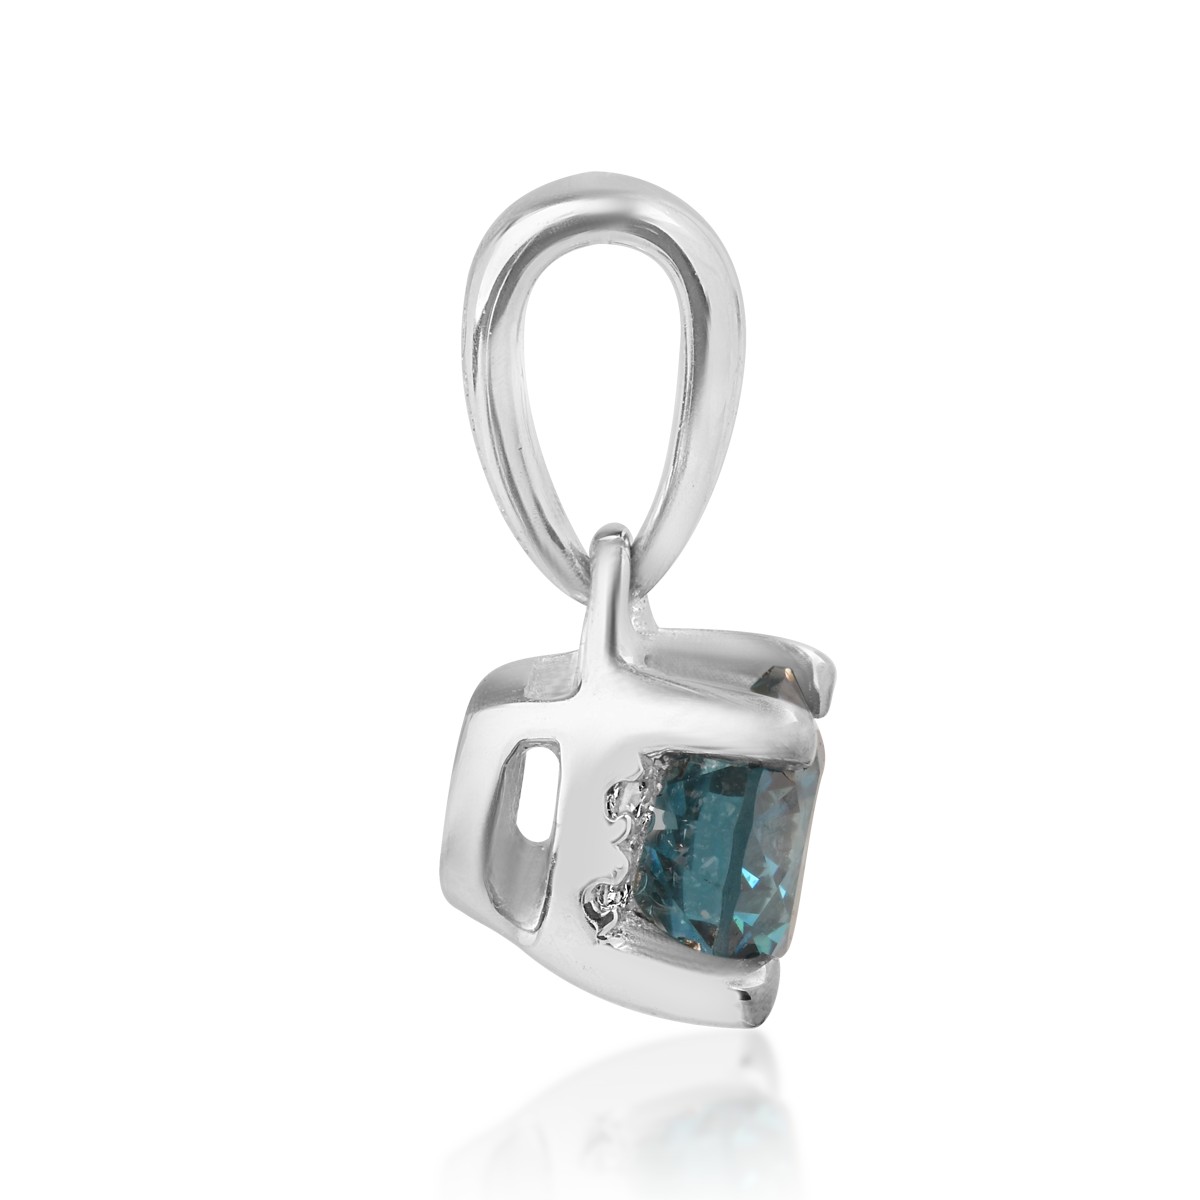 18K white gold pendant with 0.32ct blue diamond and 0.02ct diamonds